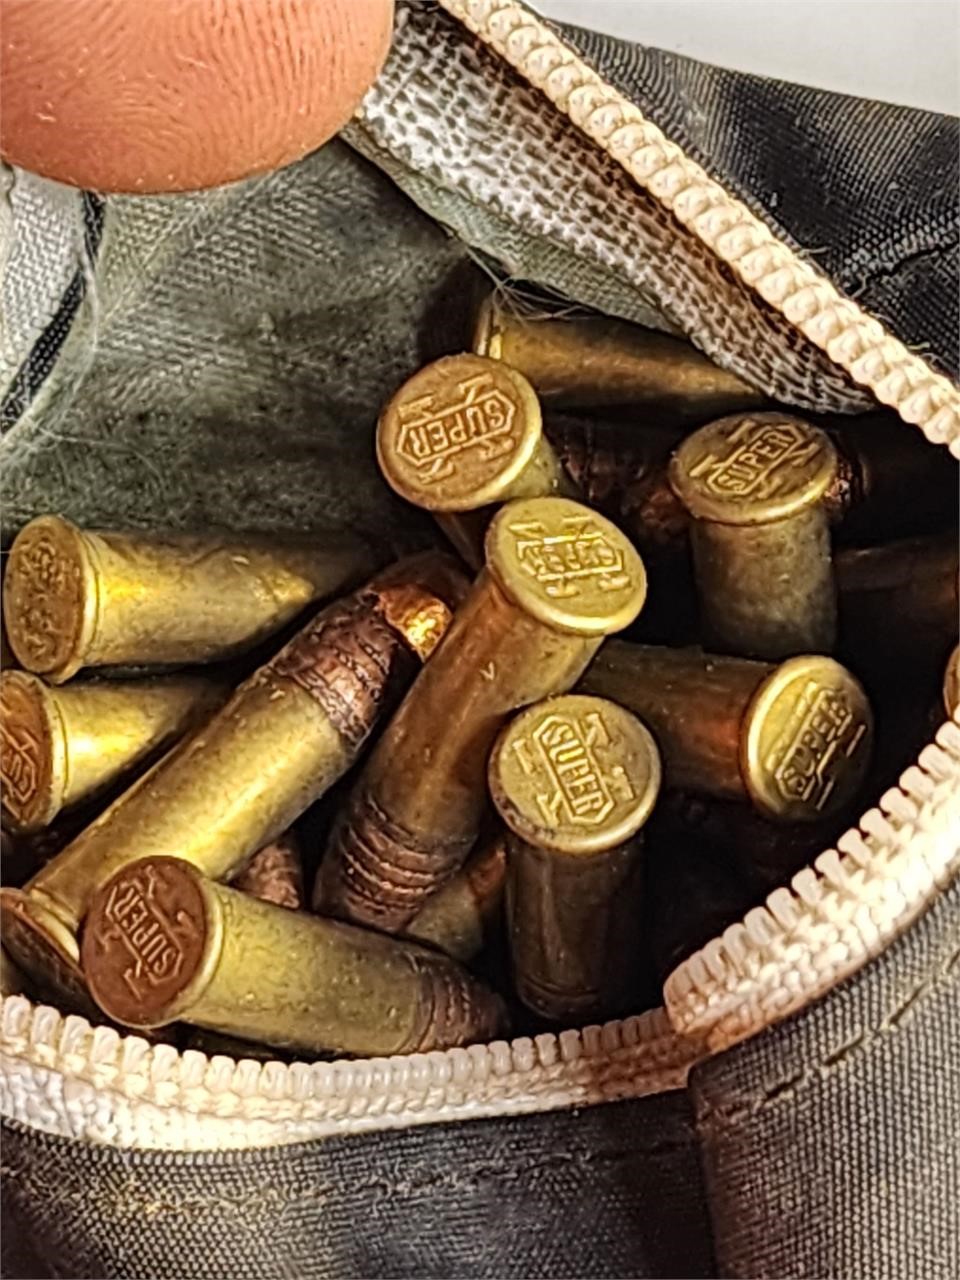 Small Bag of 22 ammunition